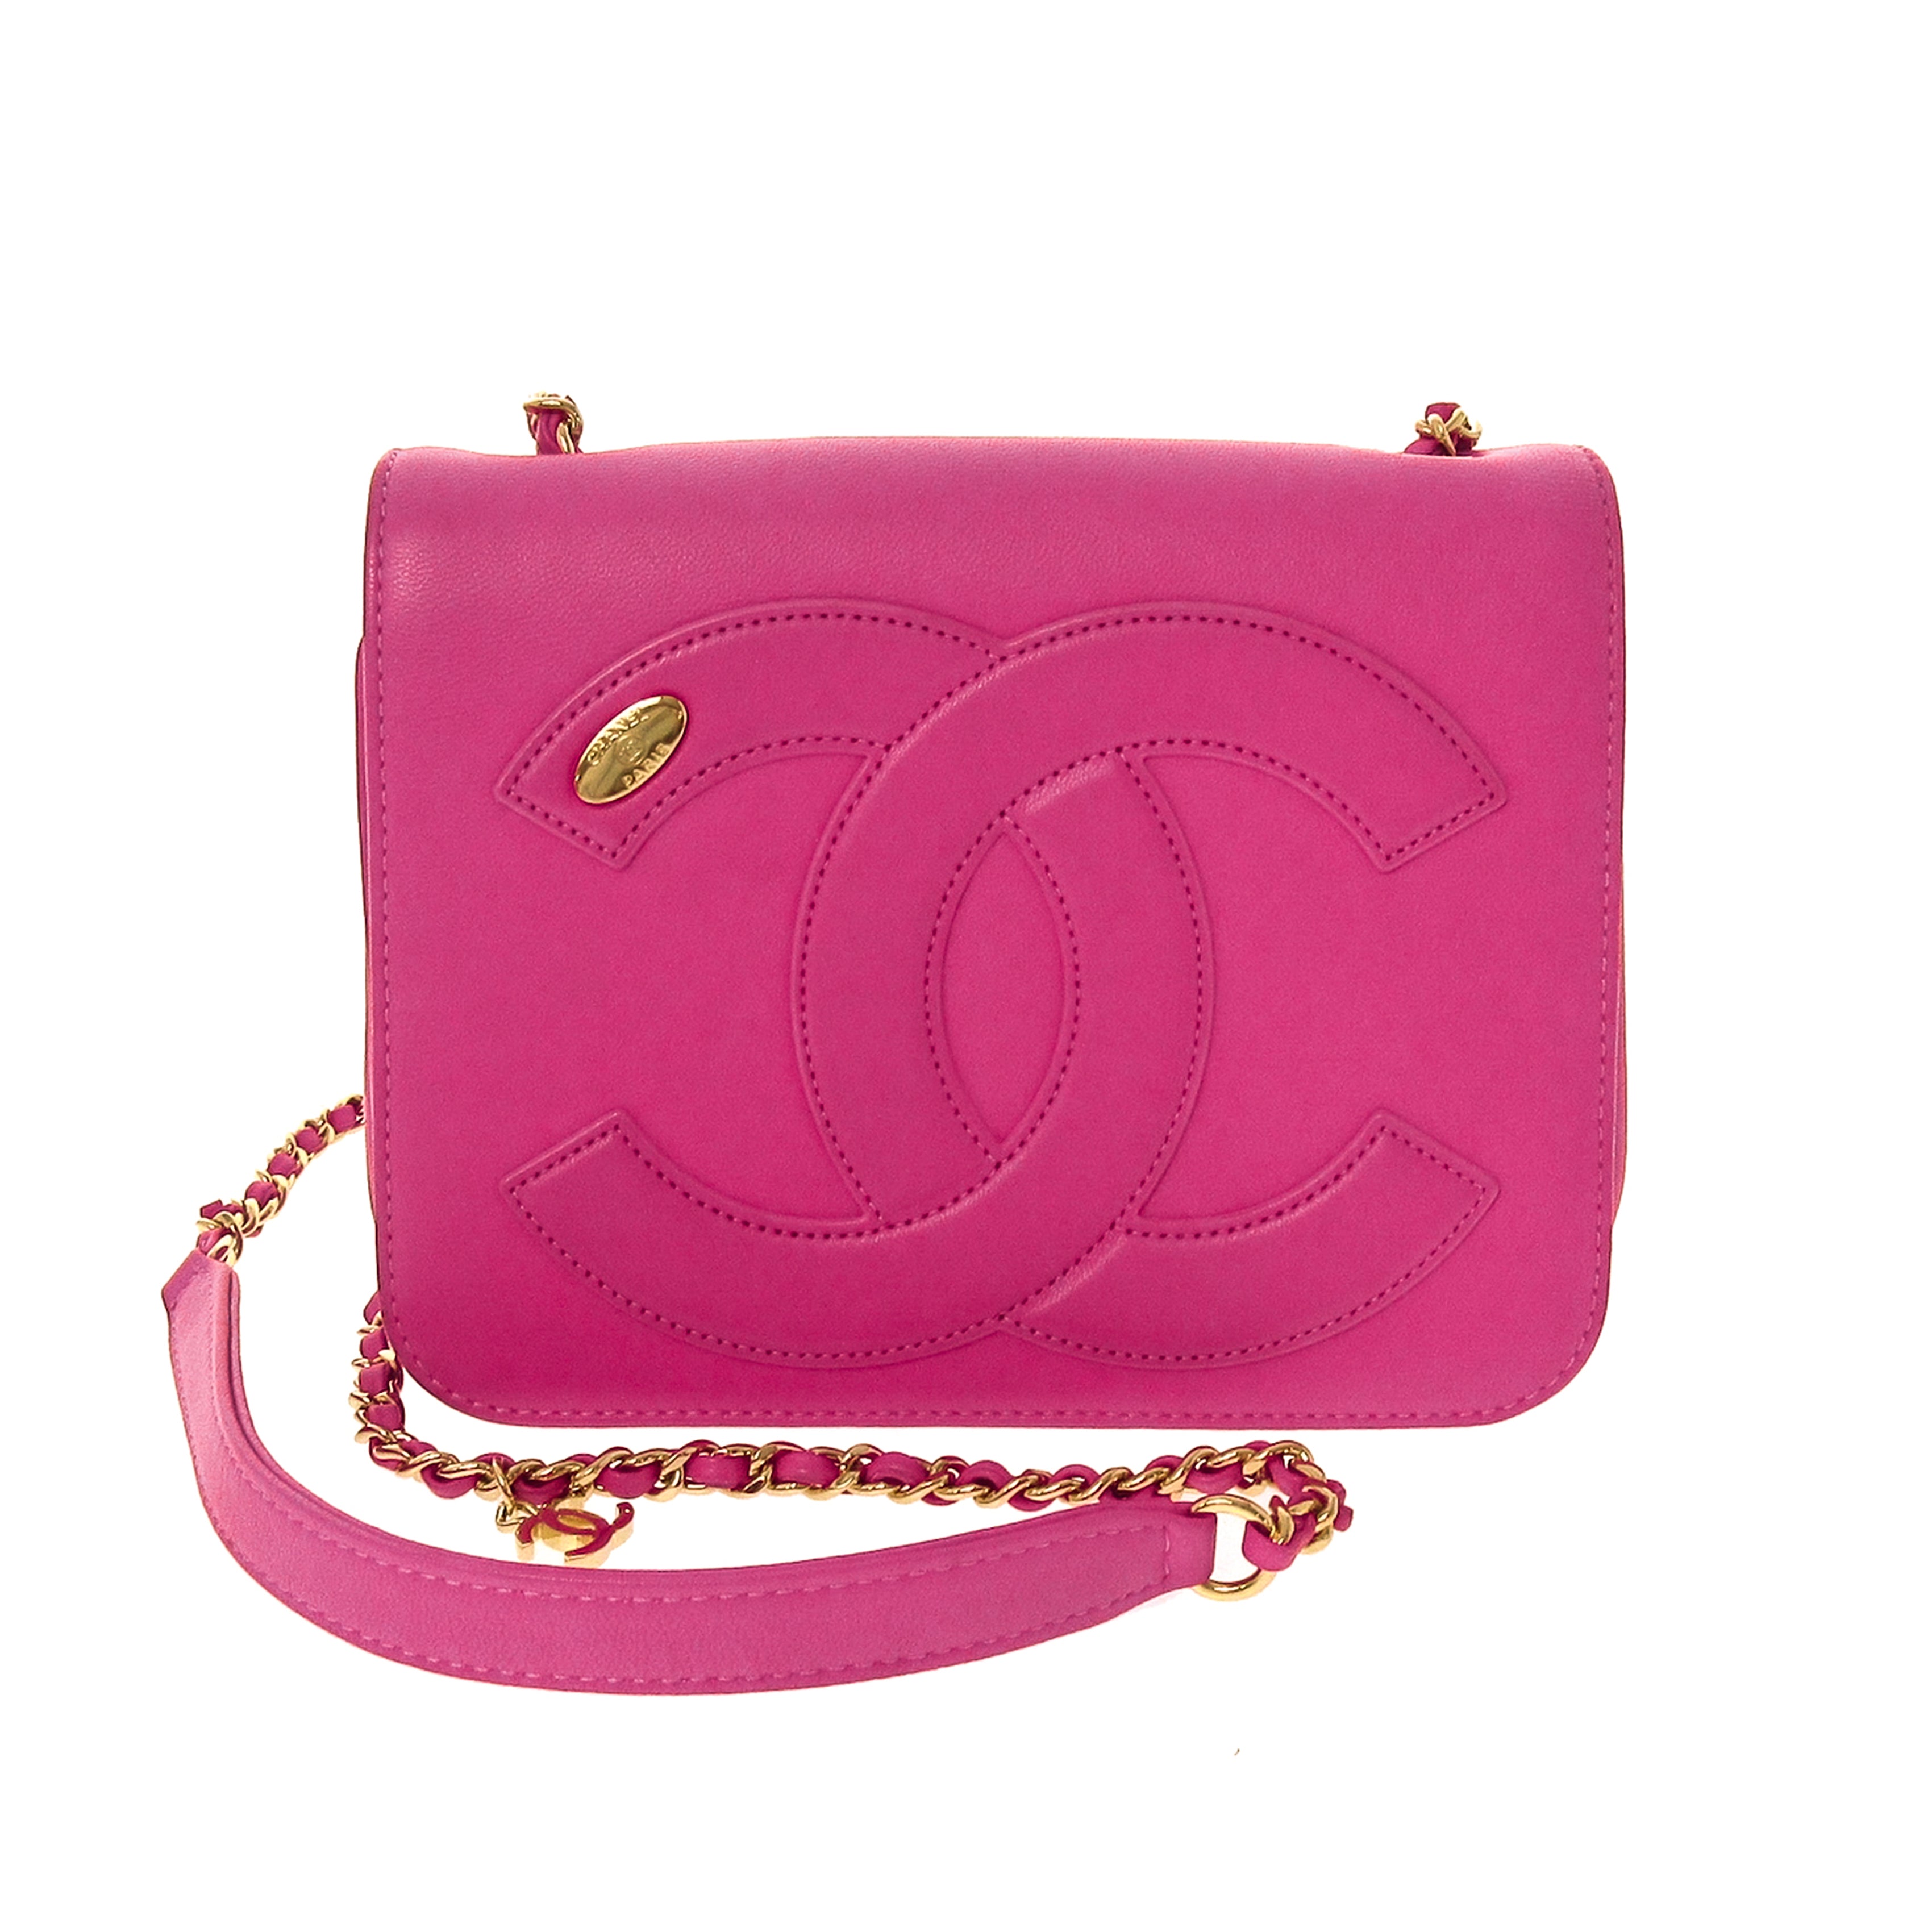 2019 Neon Pink Handbag  Rewind Vintage Affairs